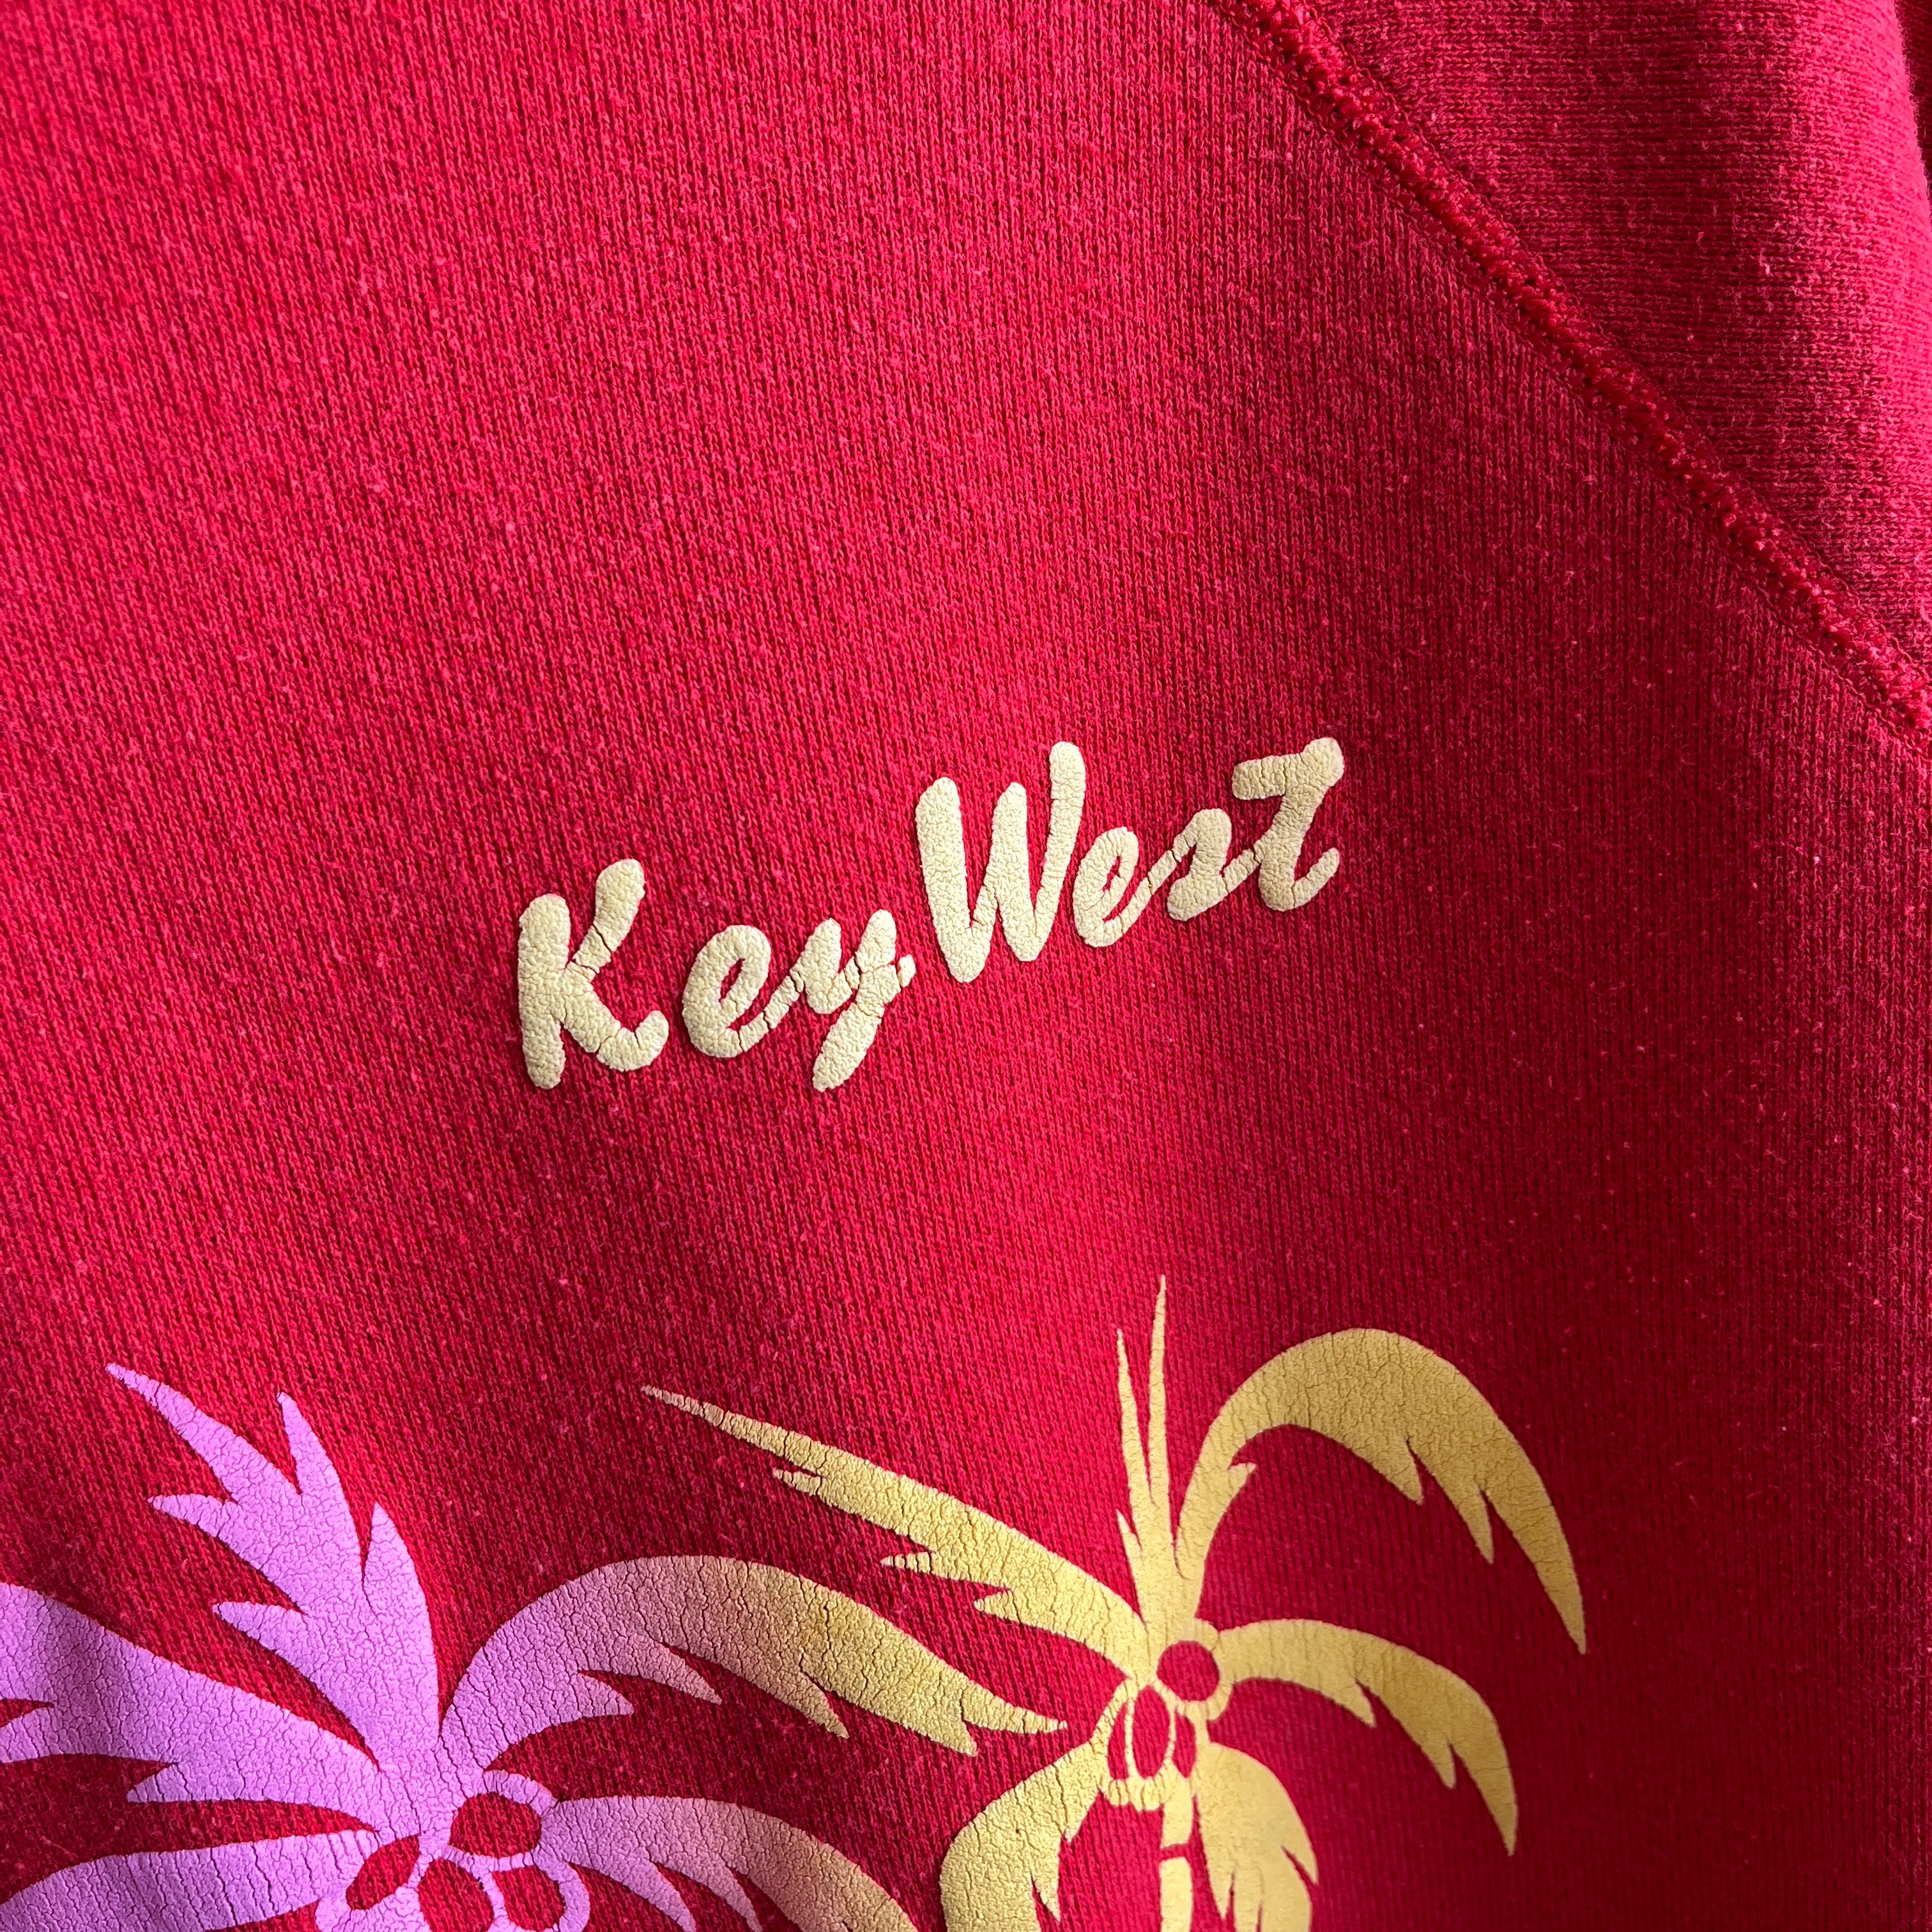 1980s Key West Tourist Sweatshirt by Hanes - A Good One!